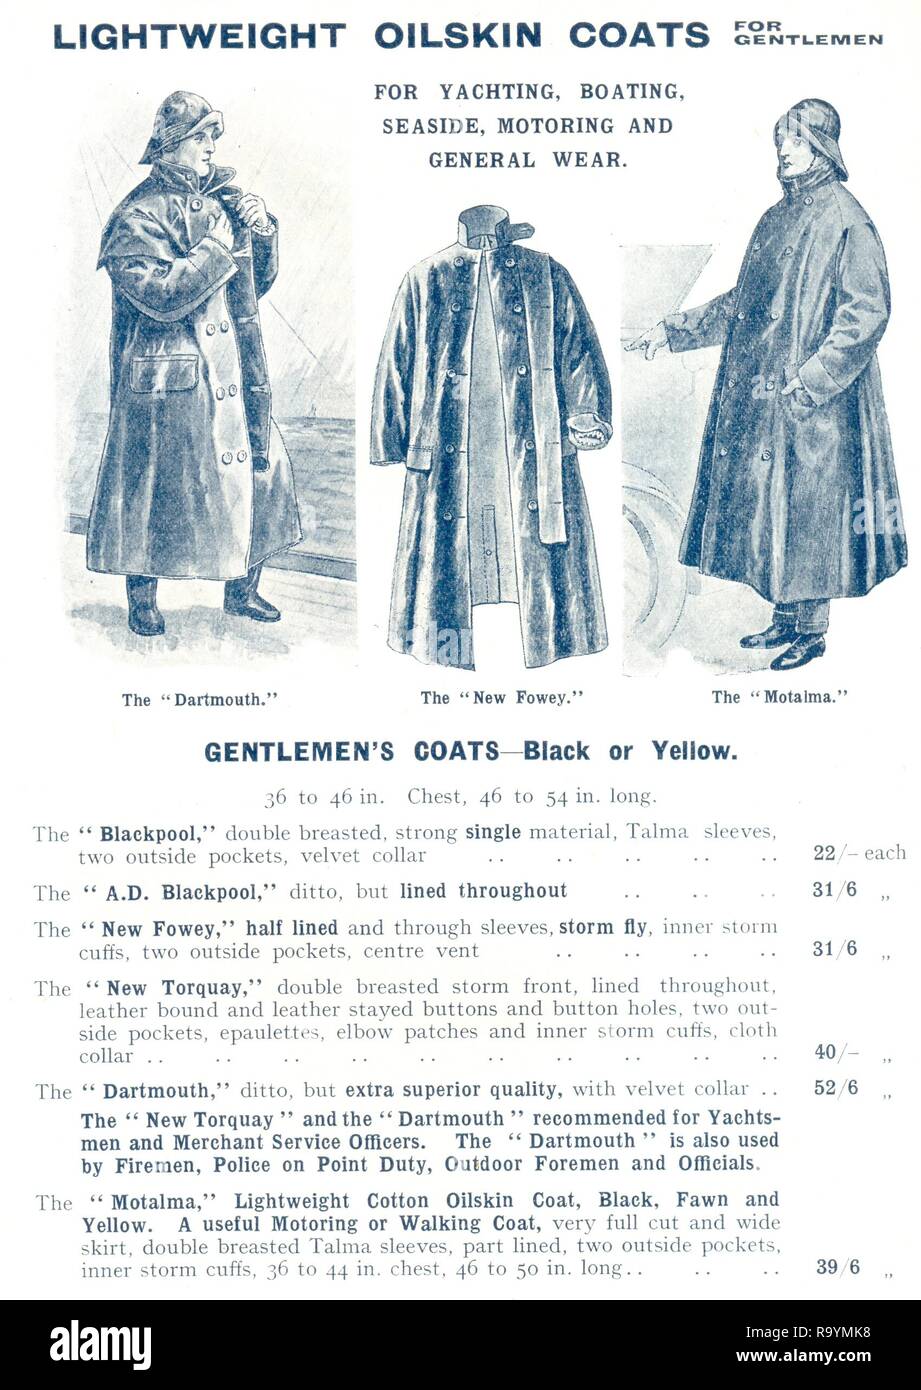 Lightweight oilskin coats for gentlement from 1922 catalogue Stock Photo